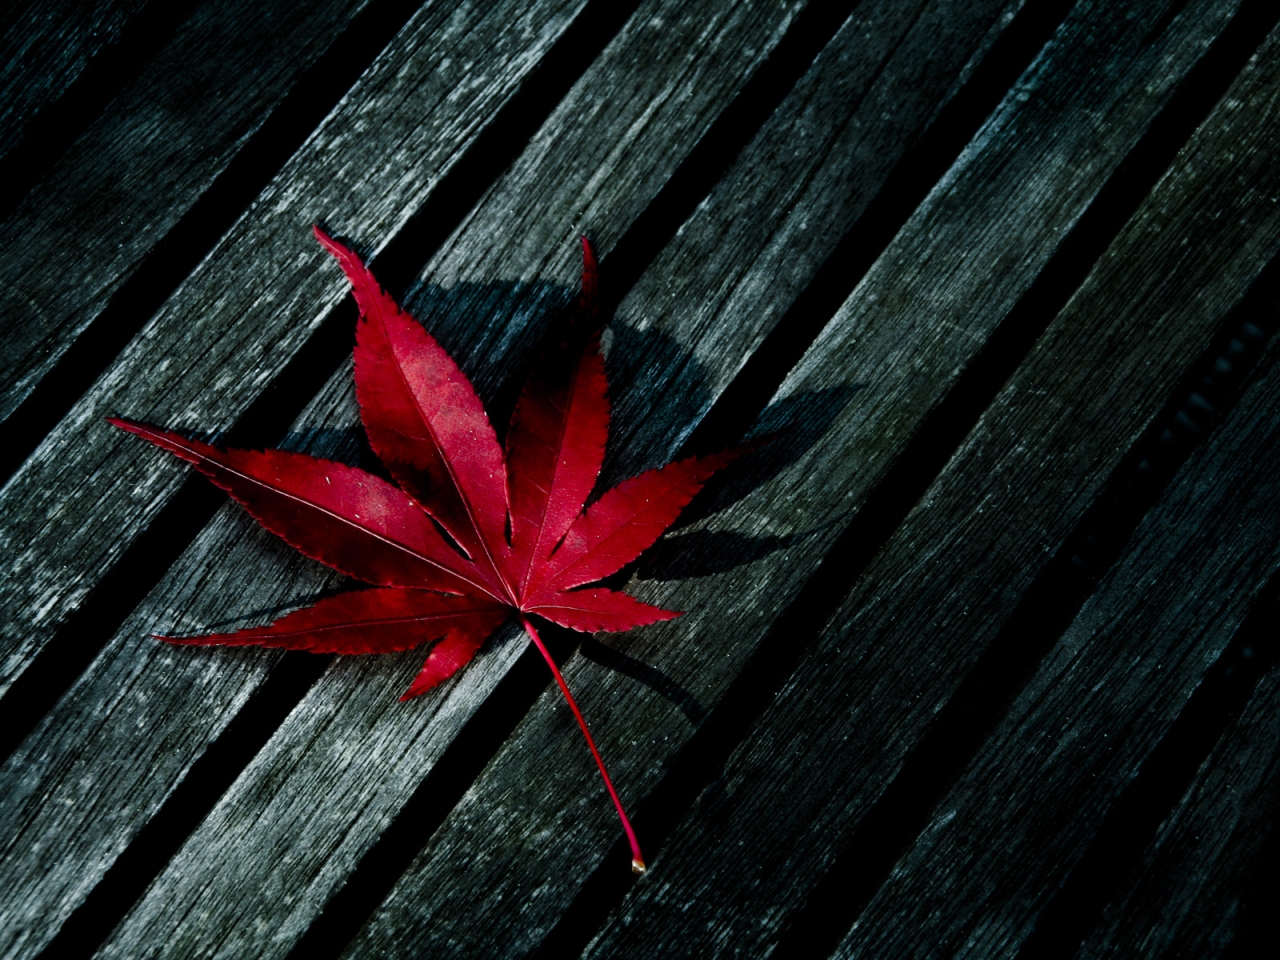 Red Fallen Leaf for 1280 x 960 resolution